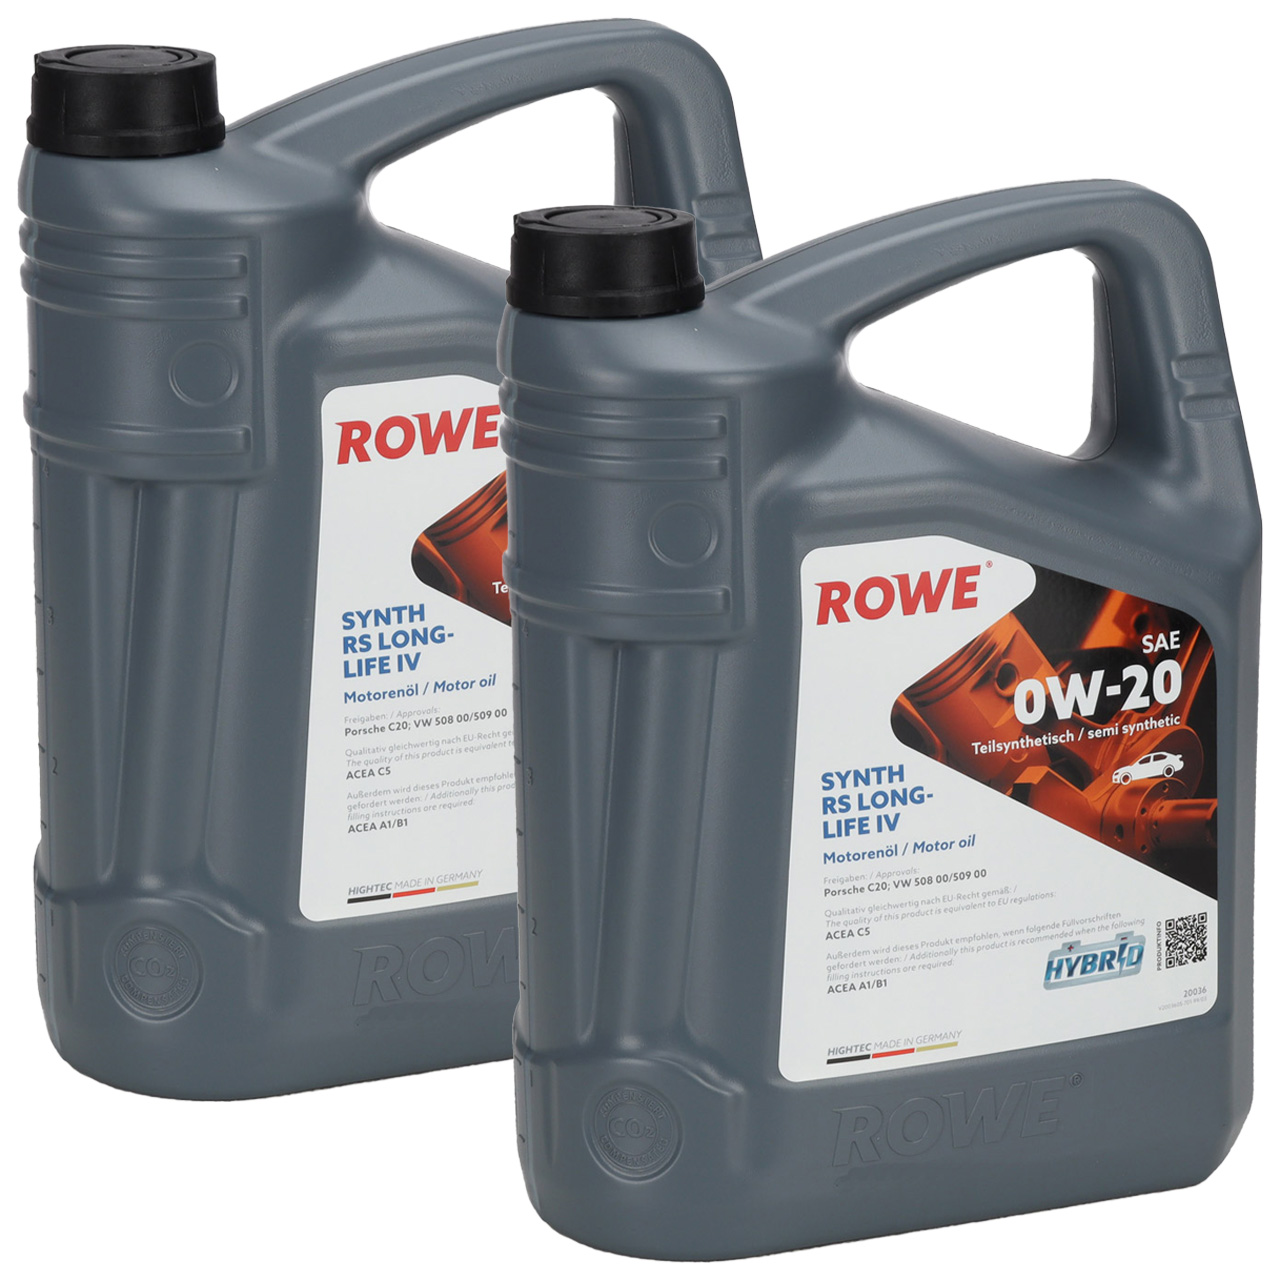 10L 10 Liter ROWE SYNTH RS LONGLIFE IV 0W-20 0W20 Motoröl Öl Porsche C20 VW  508.00/509.00 